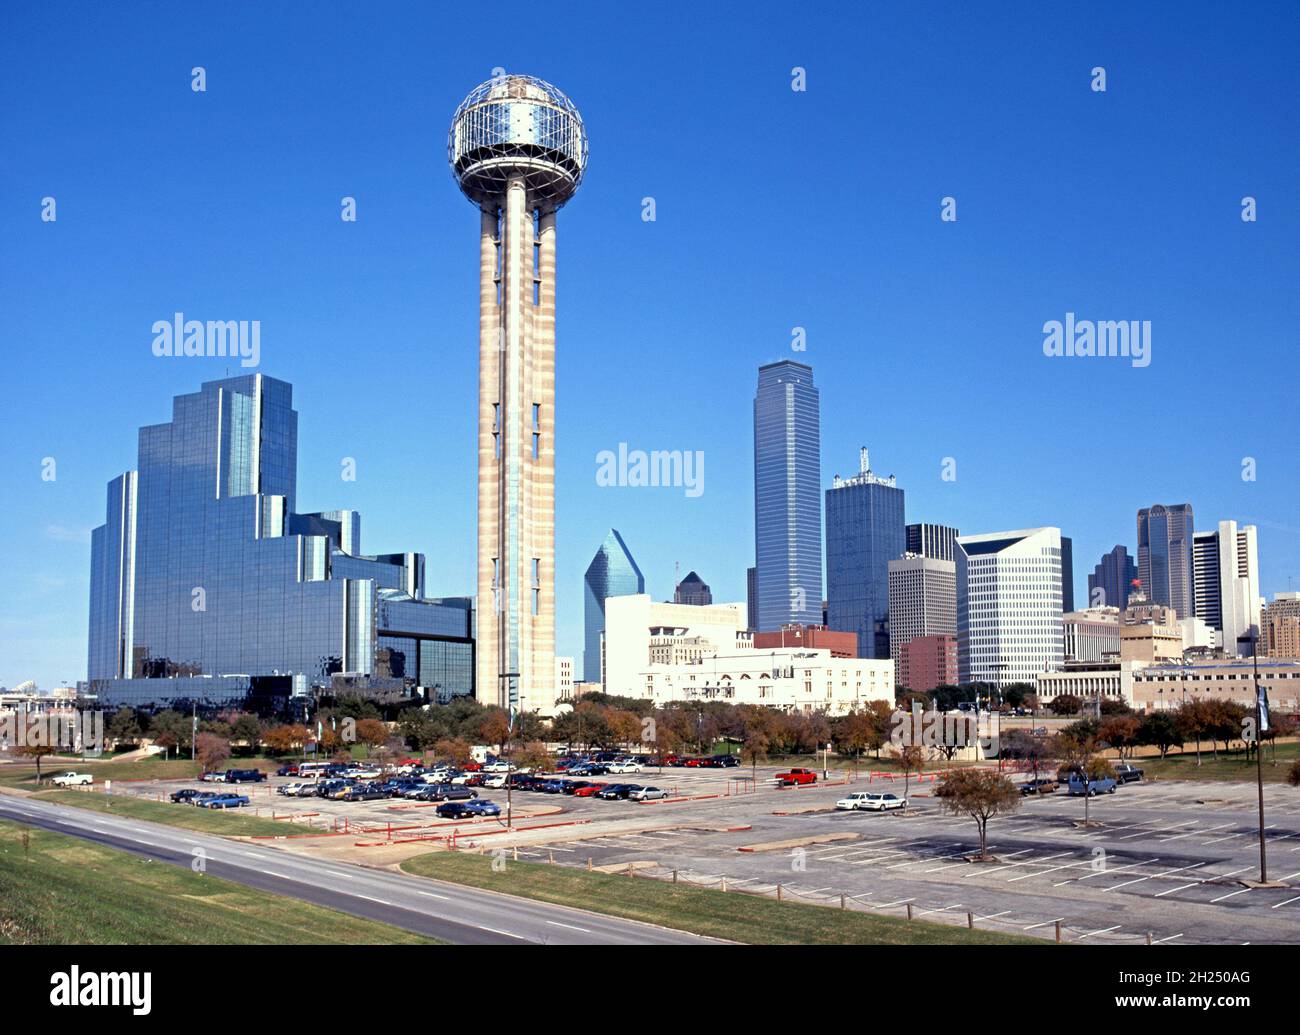 DALLAS, USA - NOVEMBER 17, 1996 - City skyscrapers Re-union tower in the foreground, Dallas, Texas, USA, November 17, 1996 Stock Photo